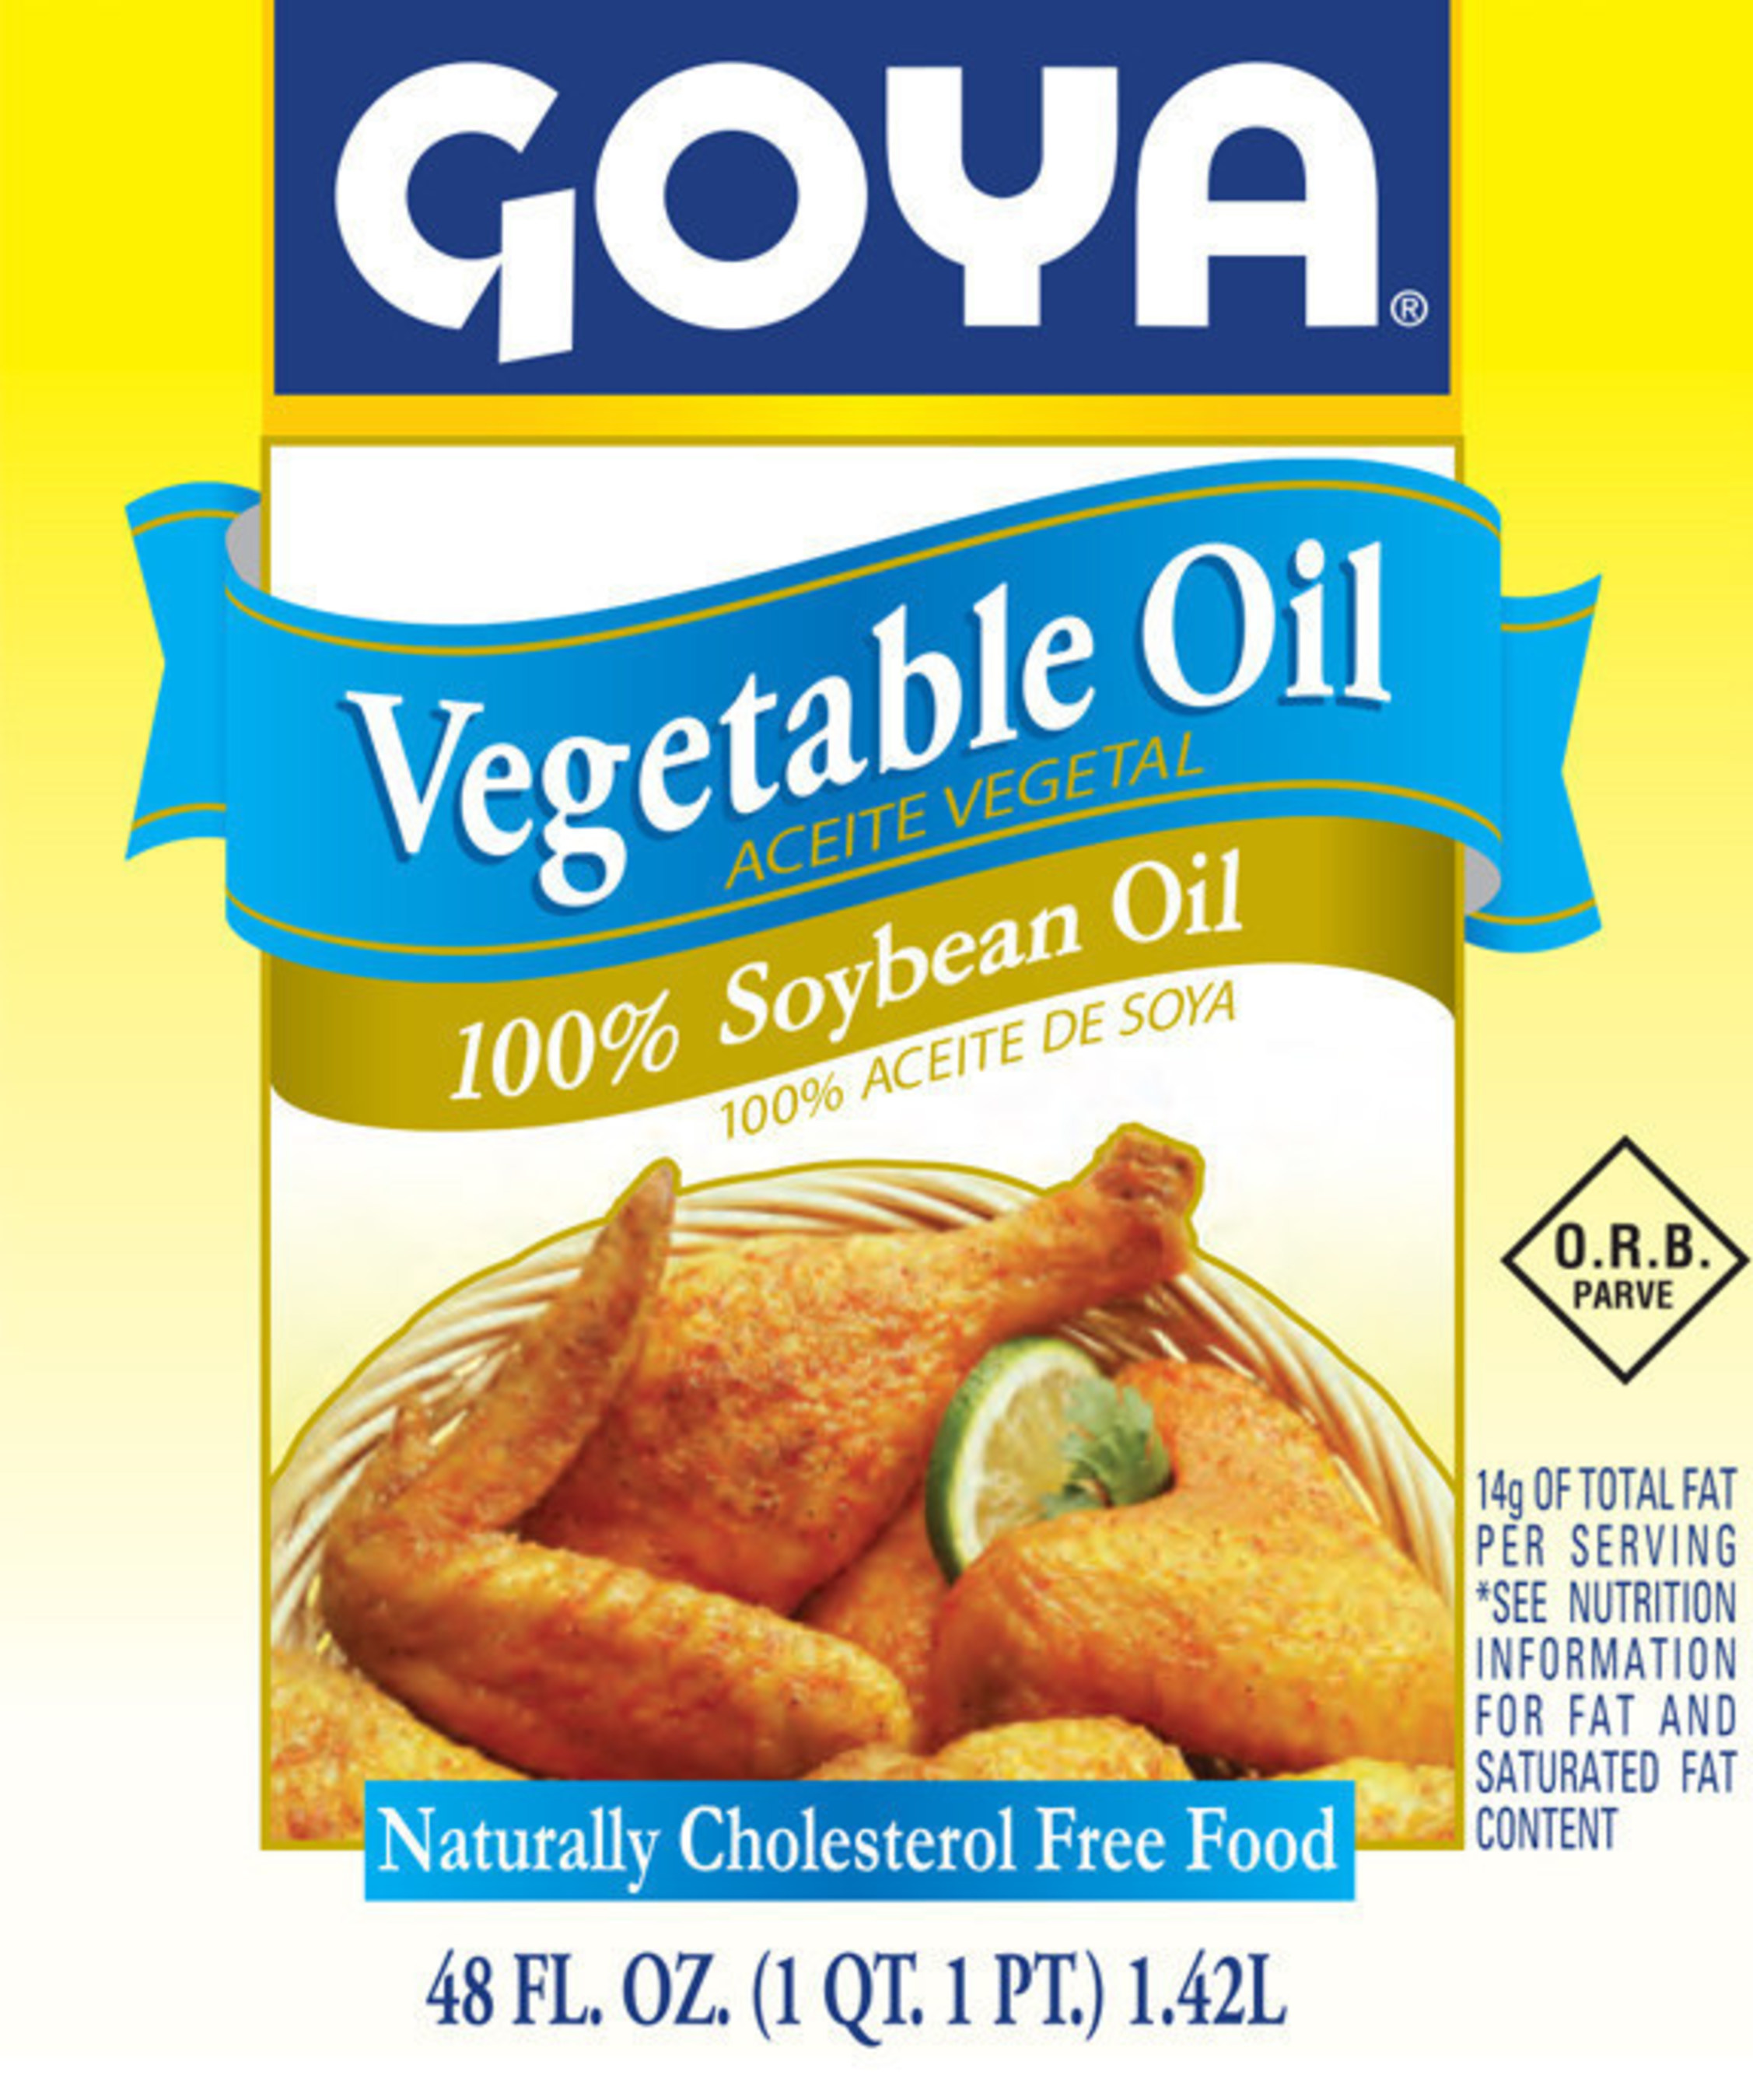 Goya Foods updates label to showcase "100% Soybean Oil".